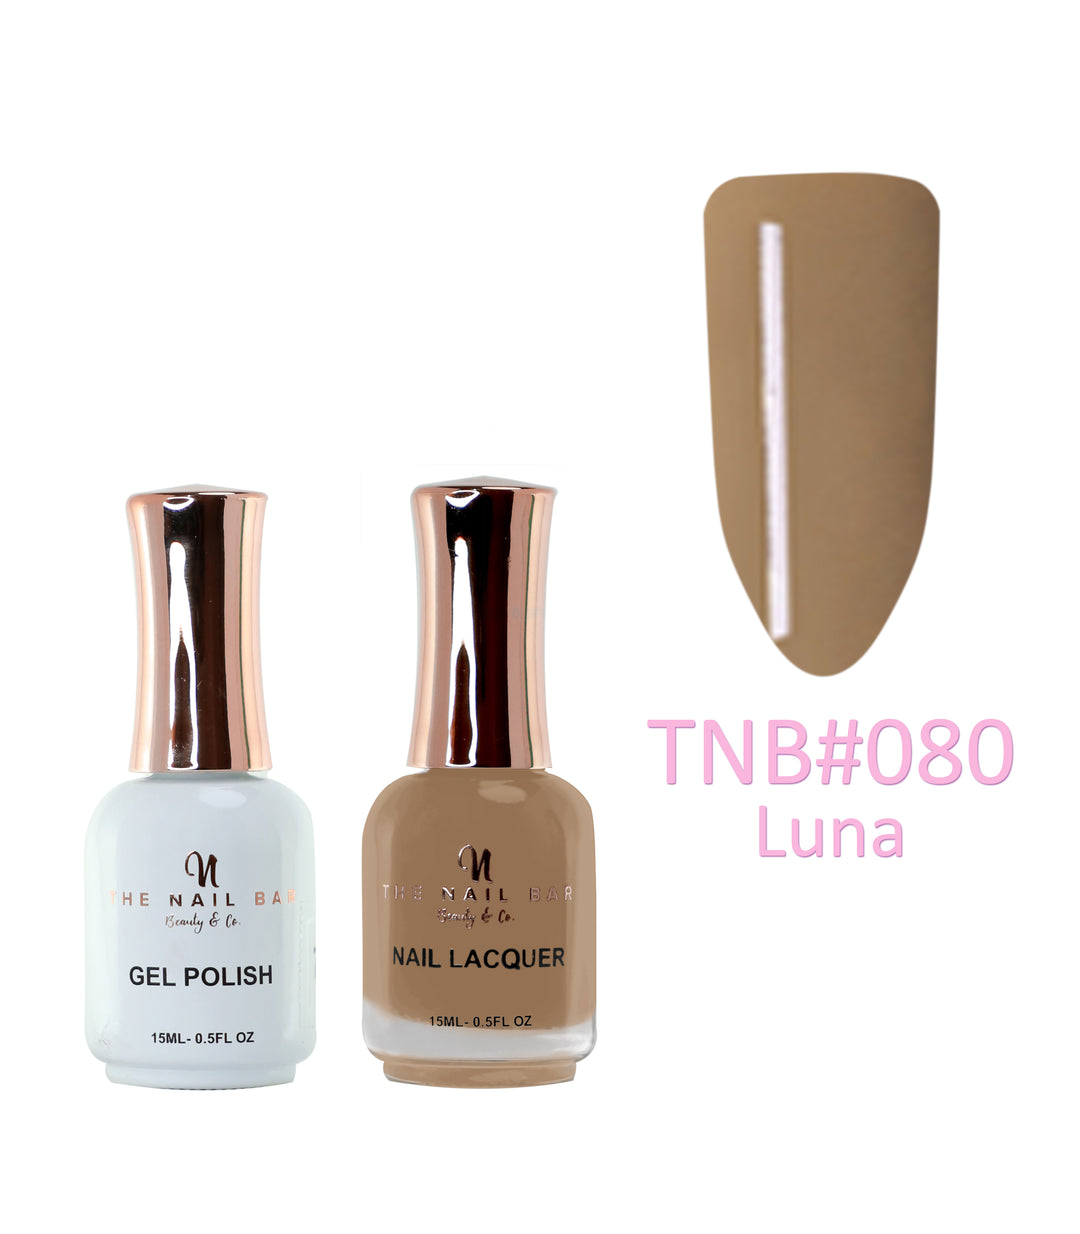 Dual Polish/Gel colour matching (15ml) - Luna - The Nail Bar Beauty & Co.